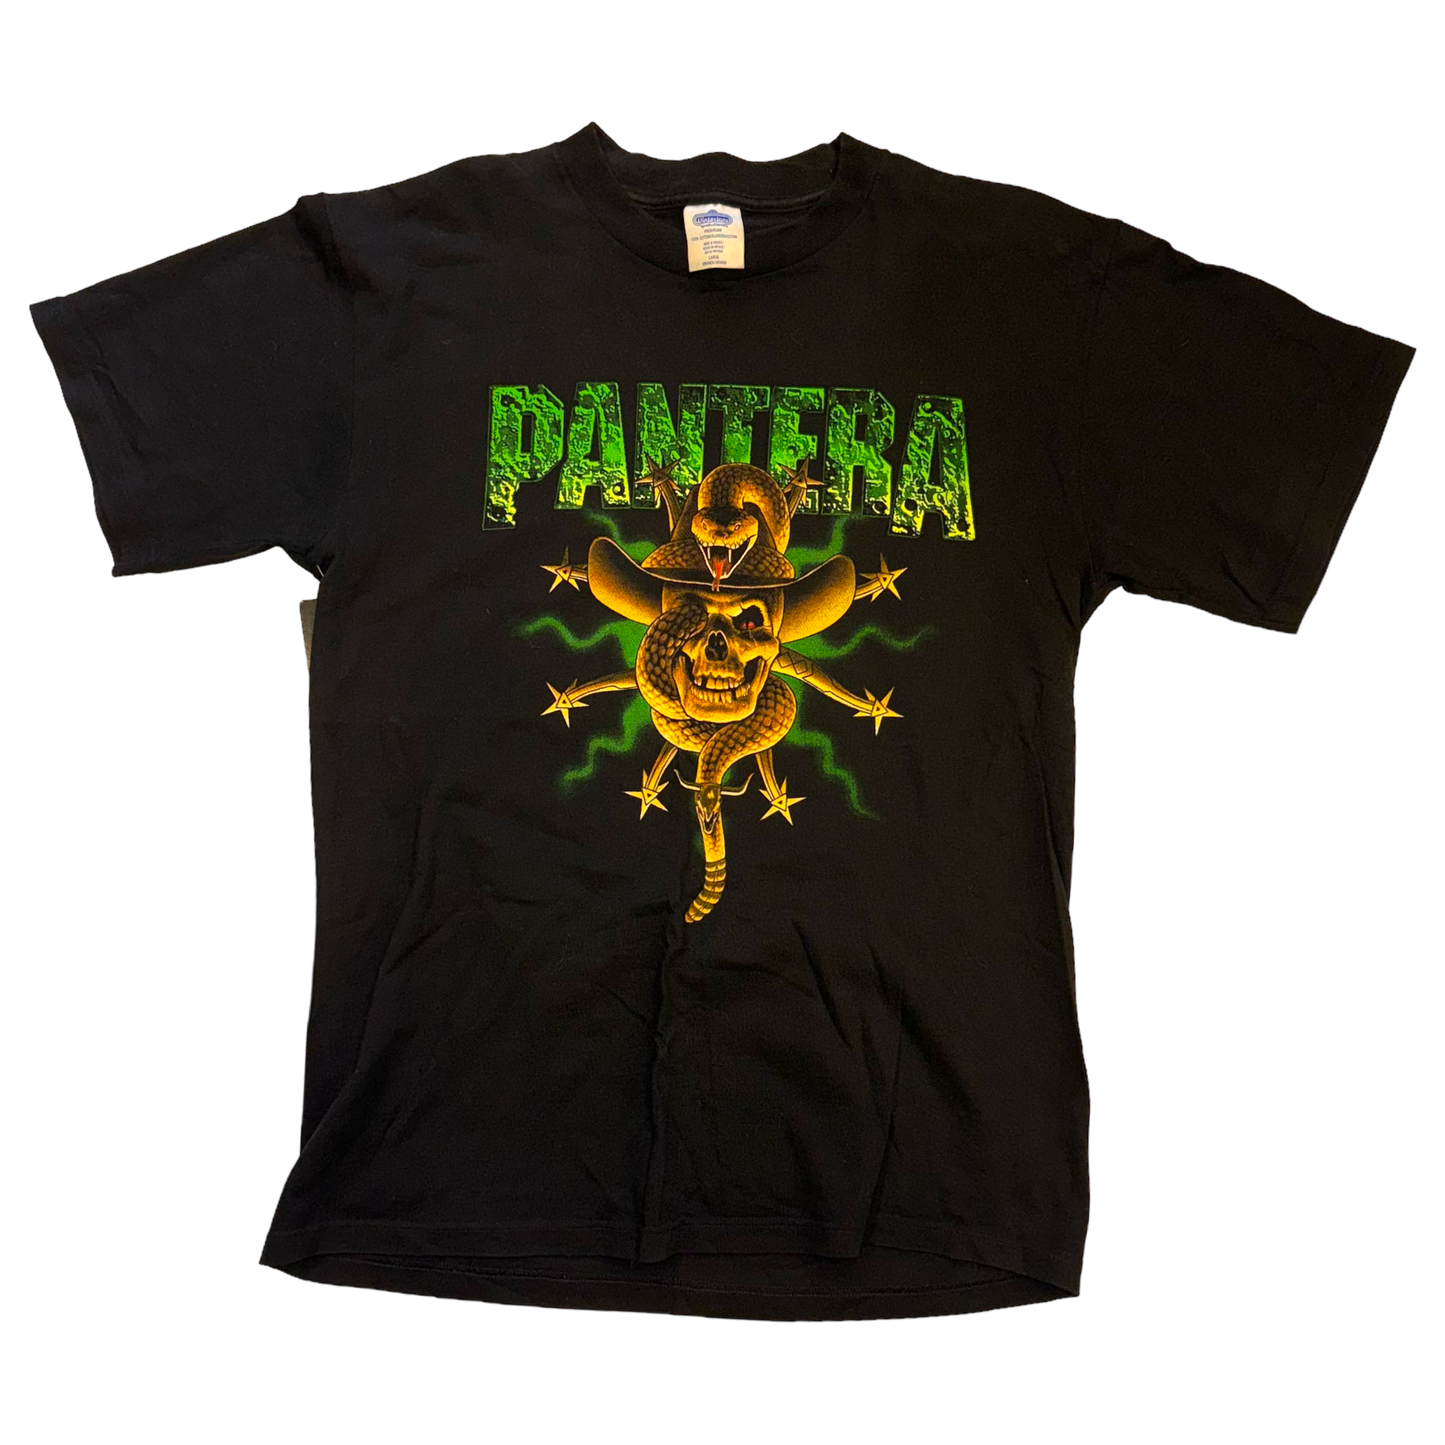 Winterland - Pantera The Great Southern Trendkill Vintage 1996 Tour T-Shirt